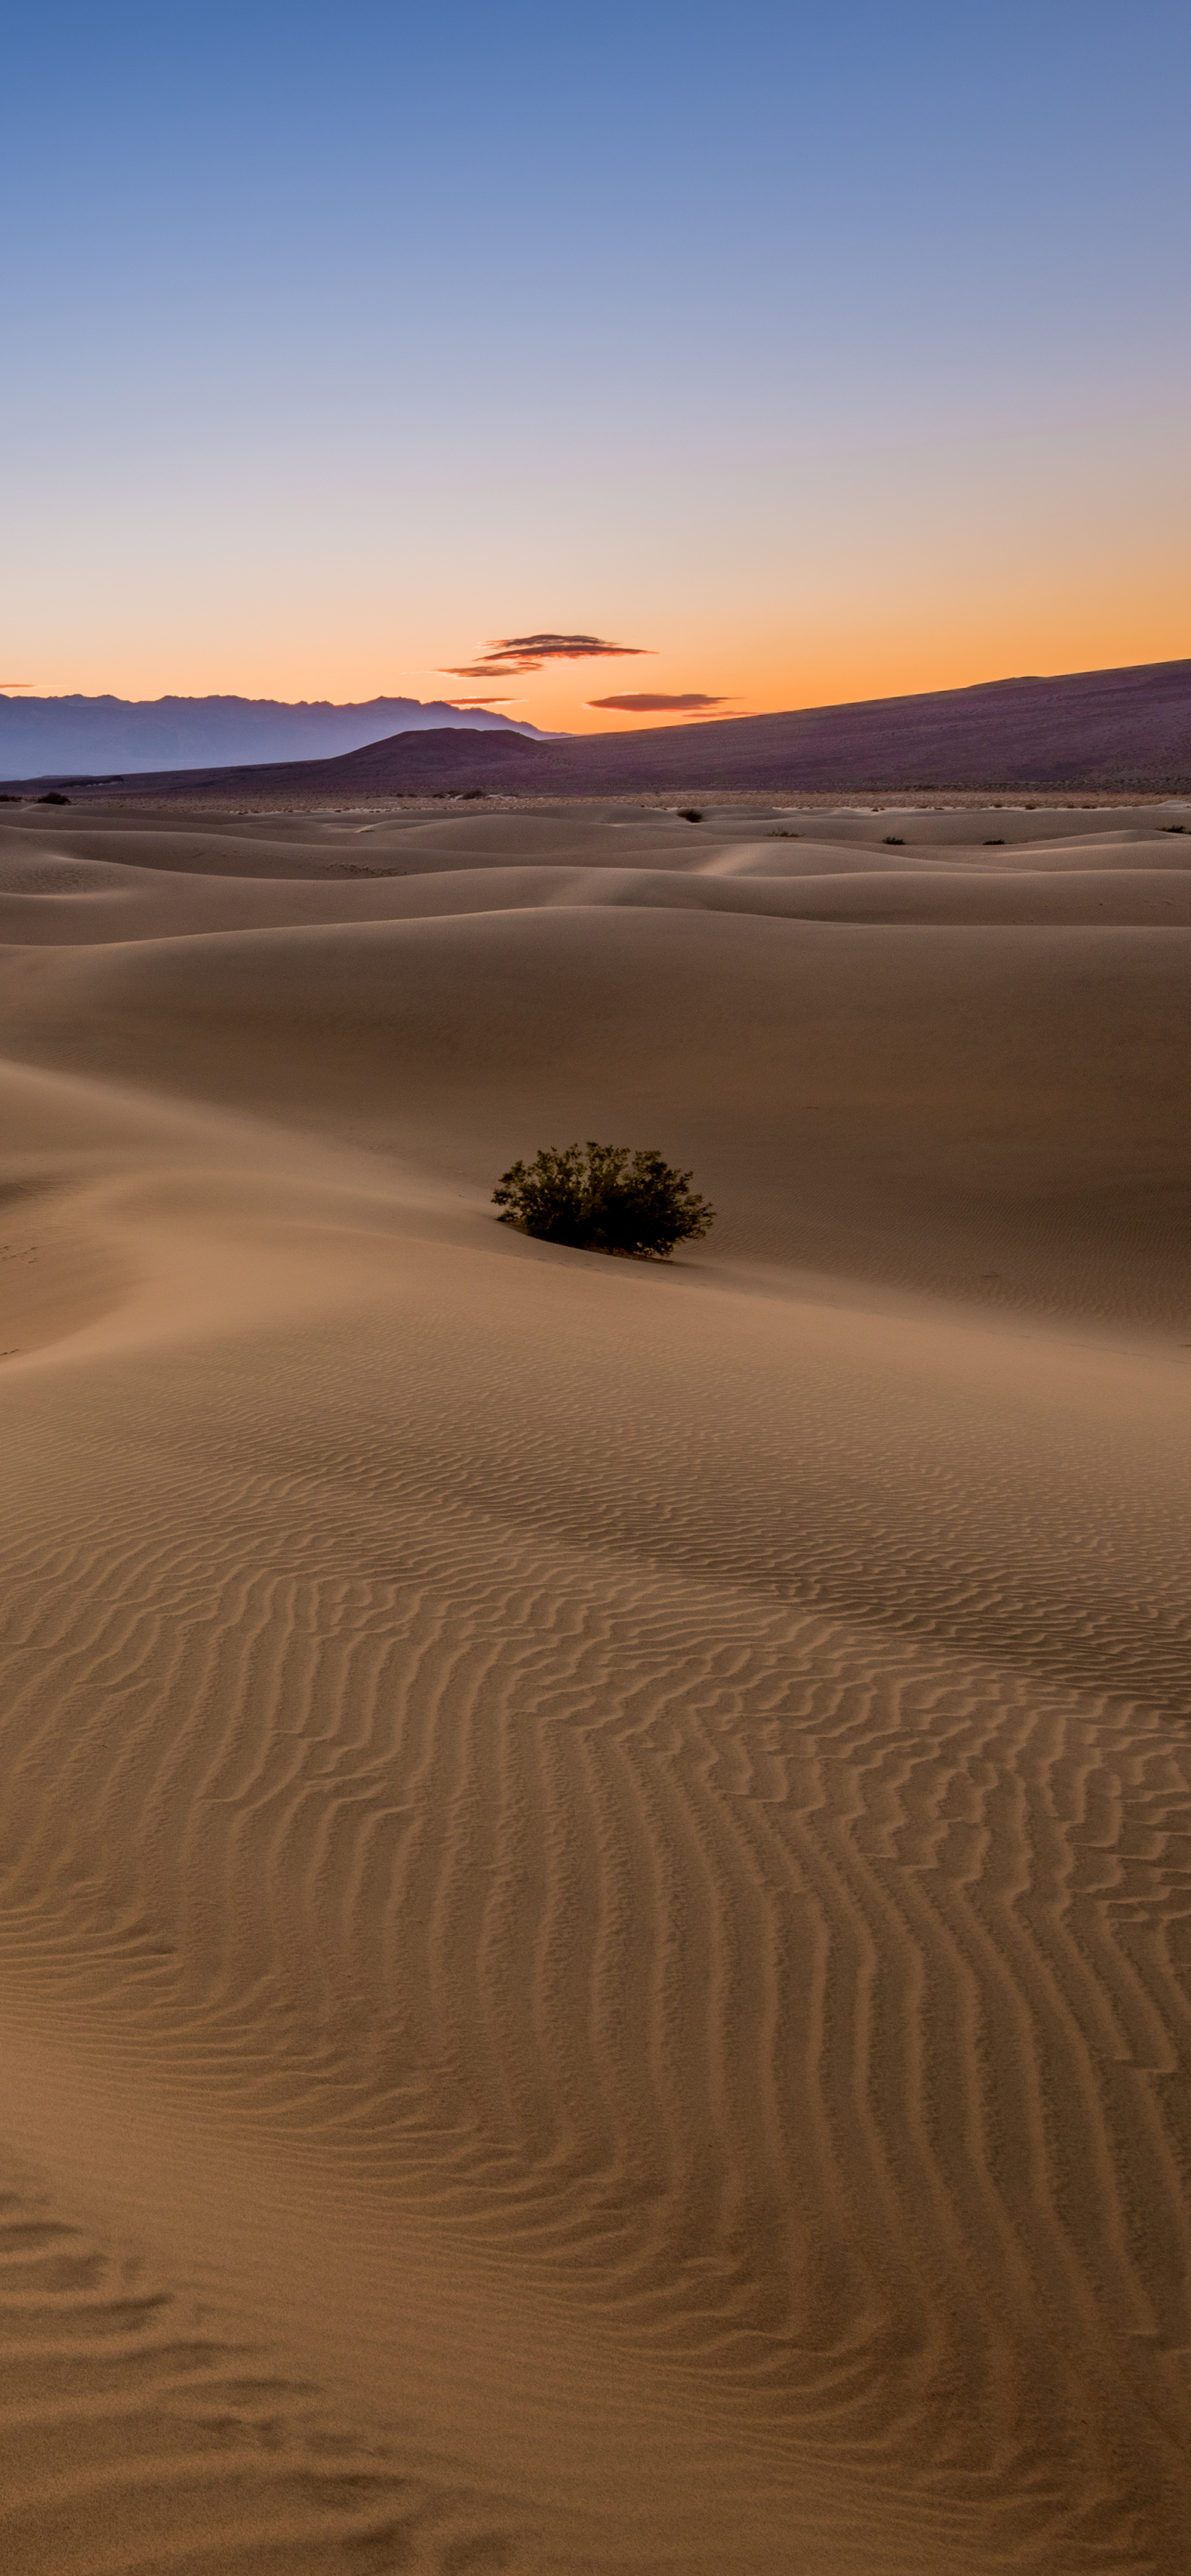 Desert Dawn